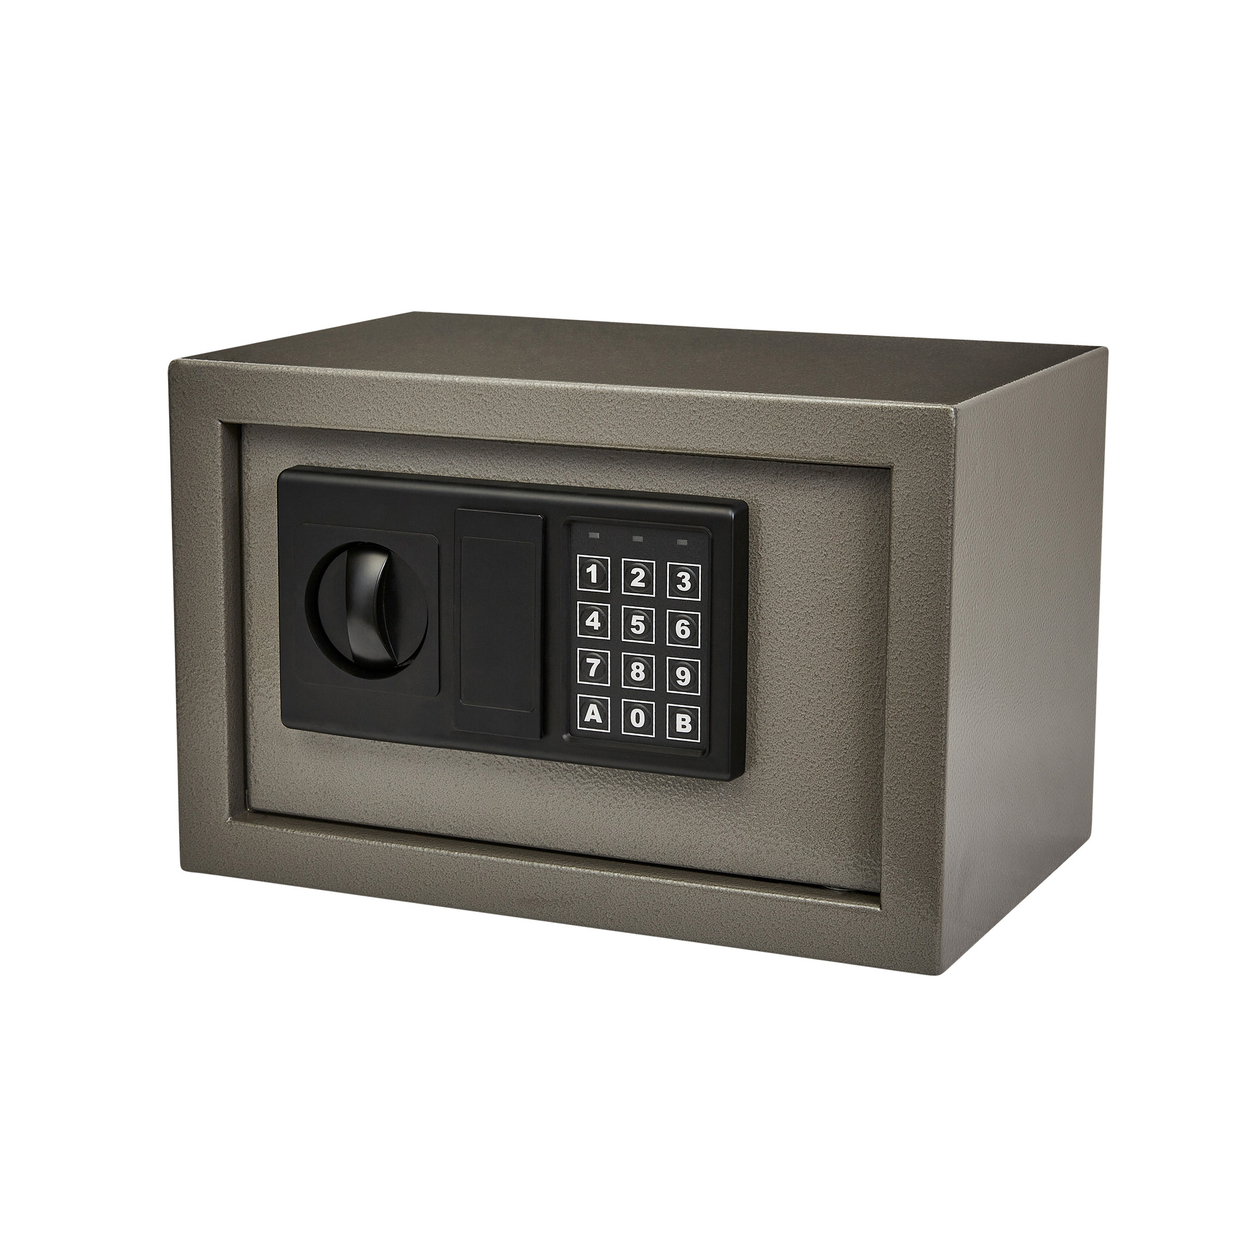 Digital Safe Box Steel Lock Box Keypad Override Keys Protects Valuables 12 X 8 X 8